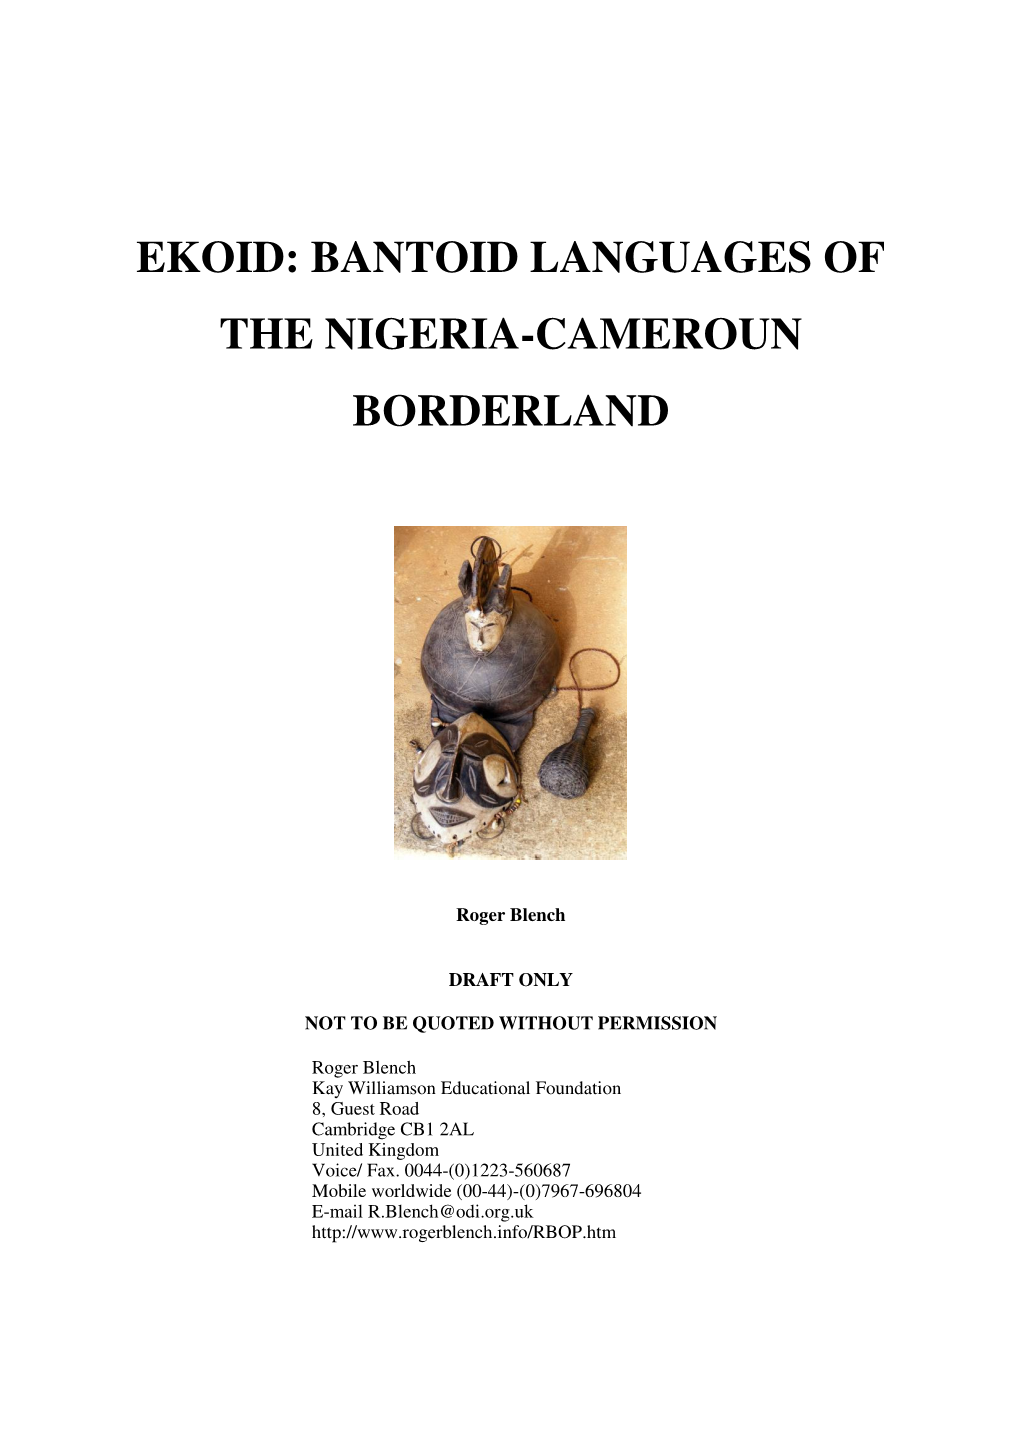 Ekoid: Bantoid Languages of the Nigeria-Cameroun Borderland